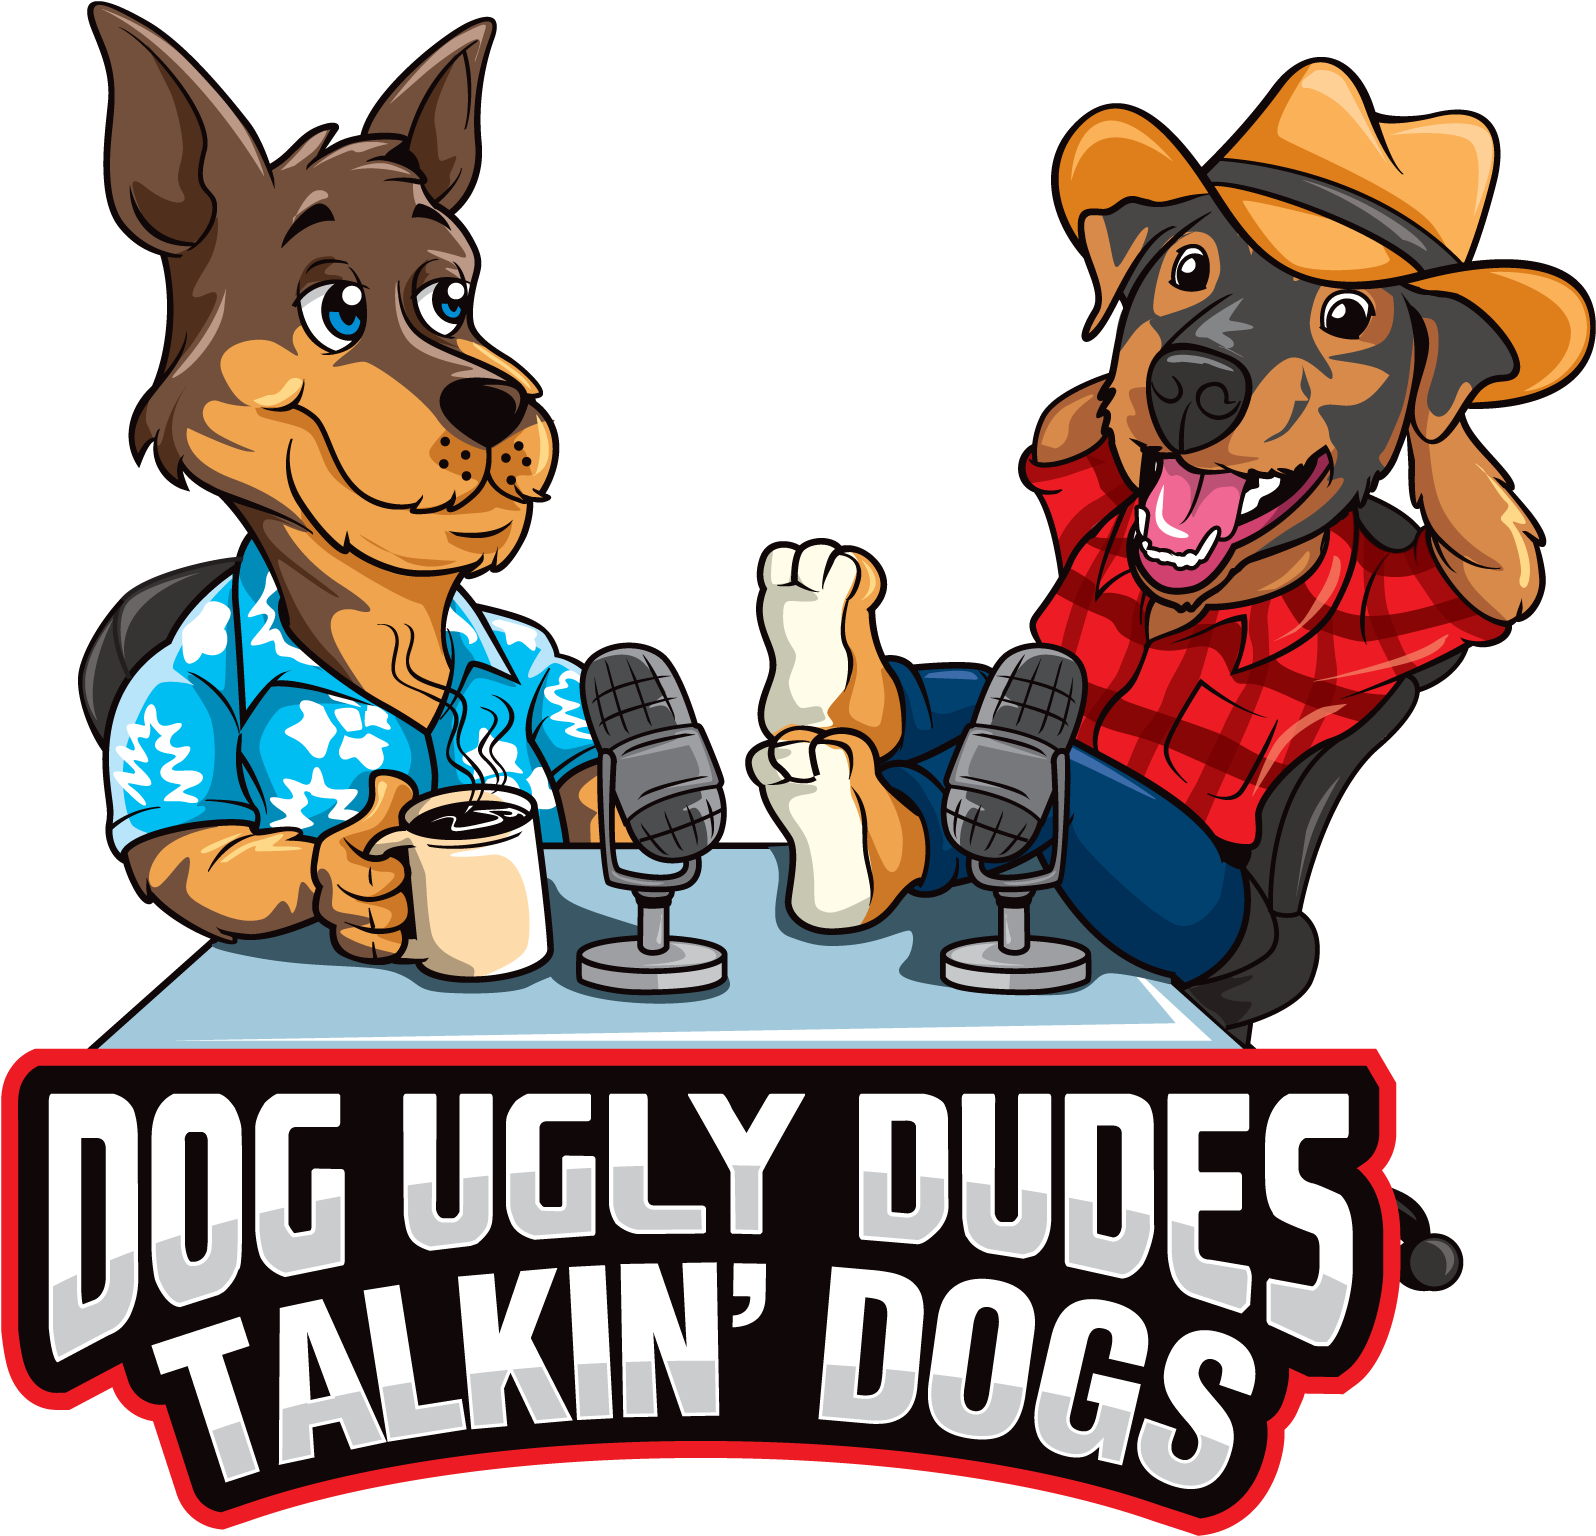 Dog Ugly Dudes Talkin' Dogs By Dog Ugly Dudes Talkin' - Dog (2000x2000)